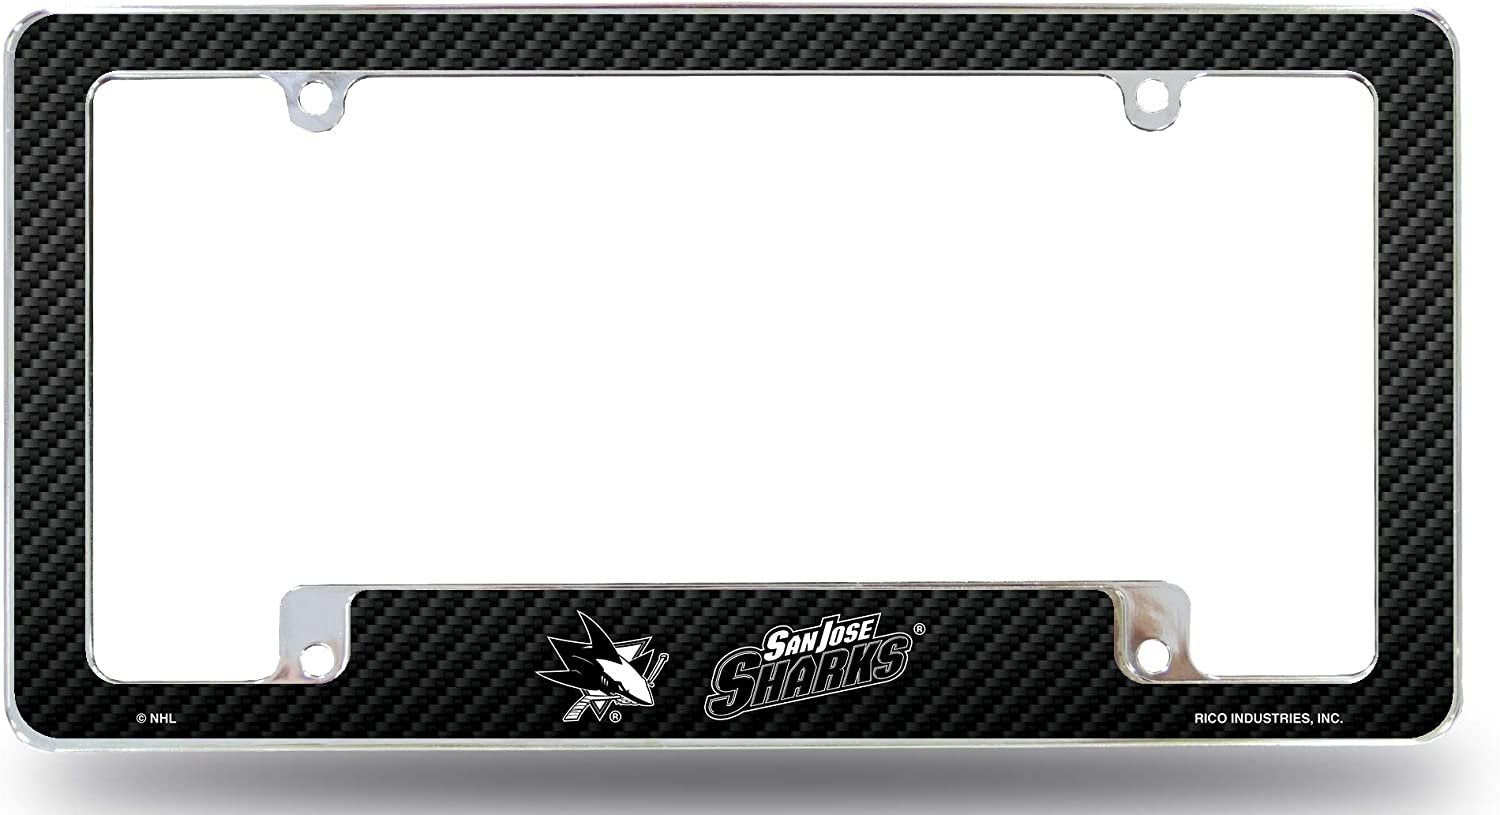 San Jose Sharks Metal License Plate Frame EZ View Carbon Fiber Design All Over Style Heavy Gauge Chrome Tag Cover Hockey